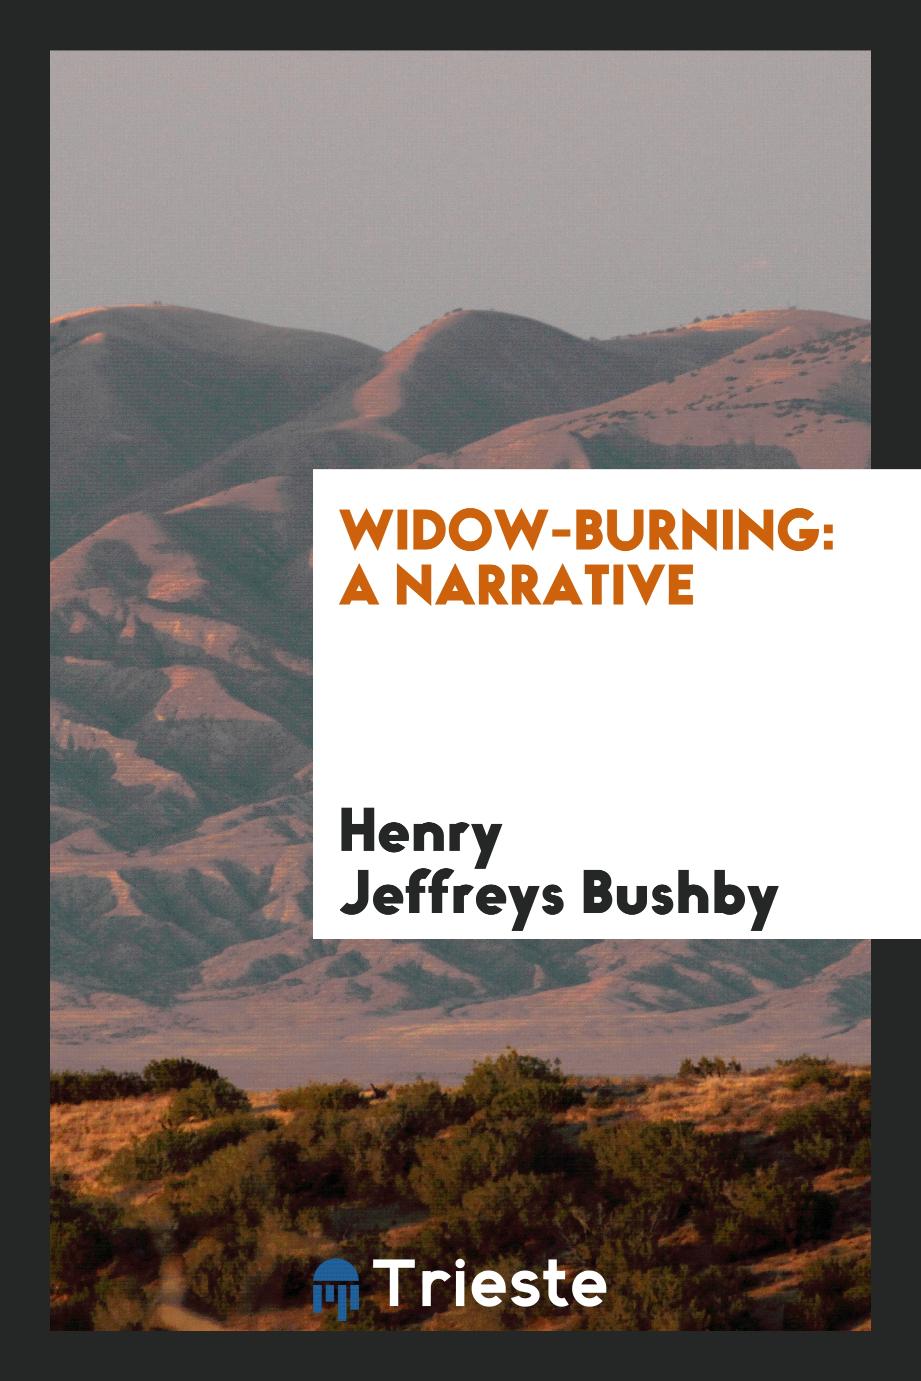 Widow-burning: a narrative